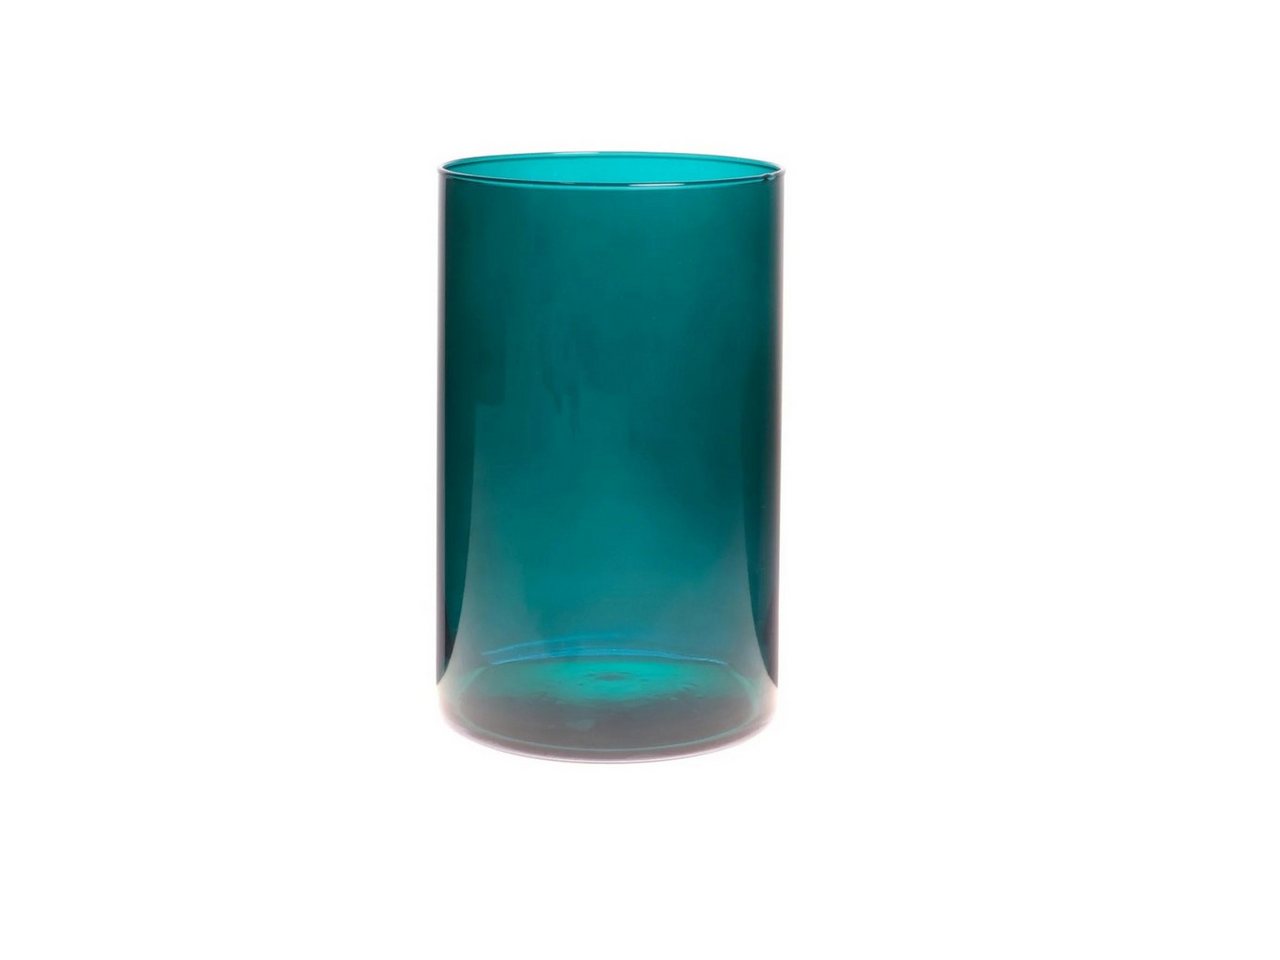 Hakbijl Glass Deko-Glas, Blau H:25cm D:18cm Glas von Hakbijl Glass